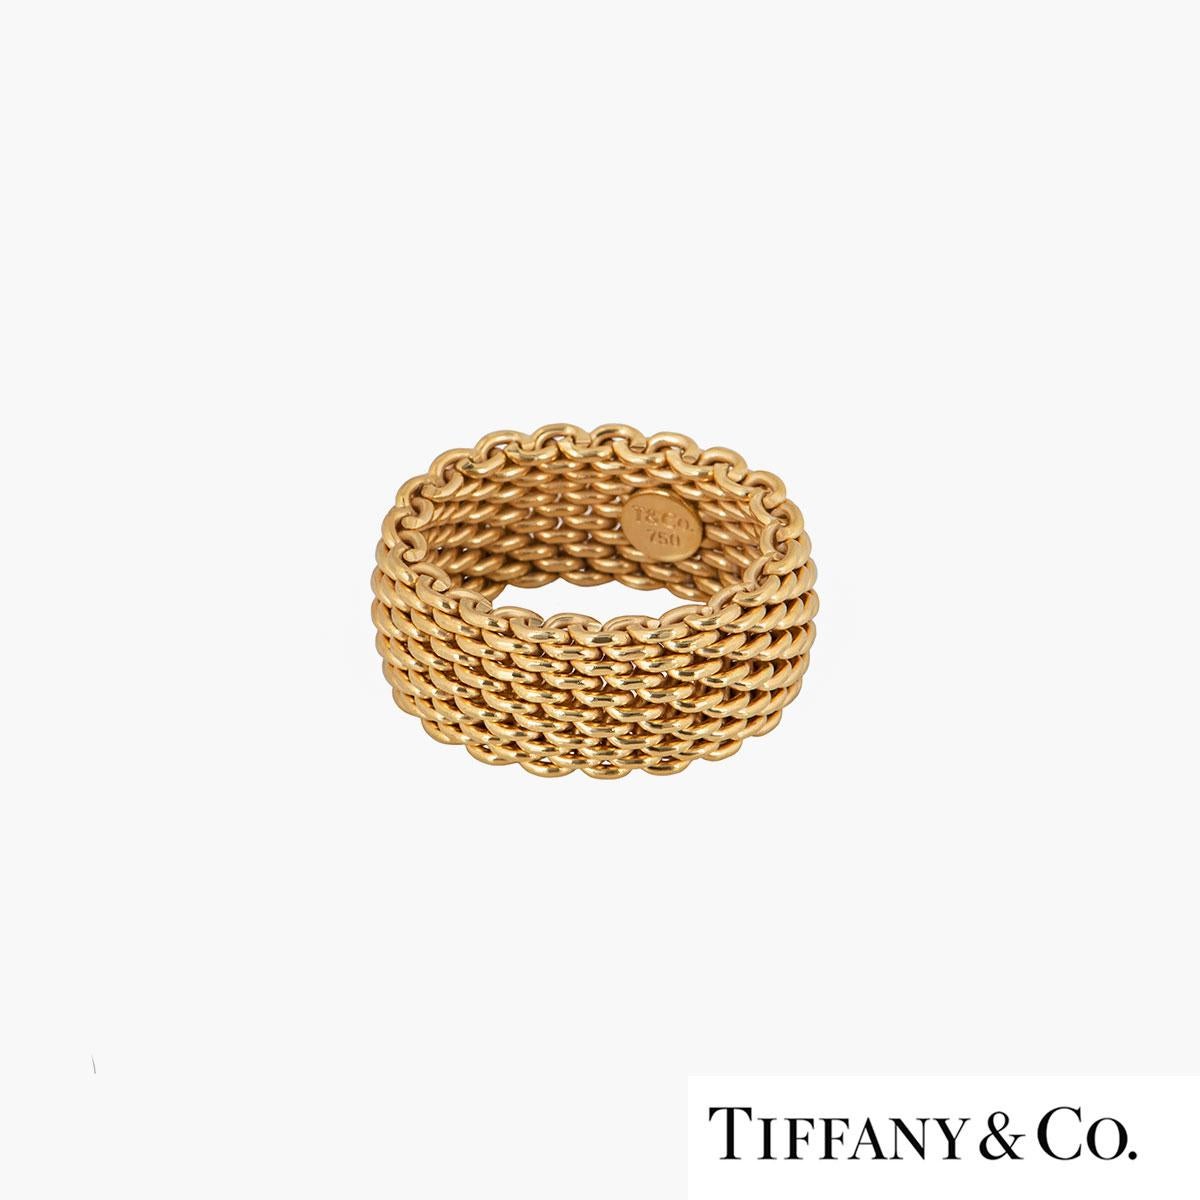 tiffany somerset ring gold